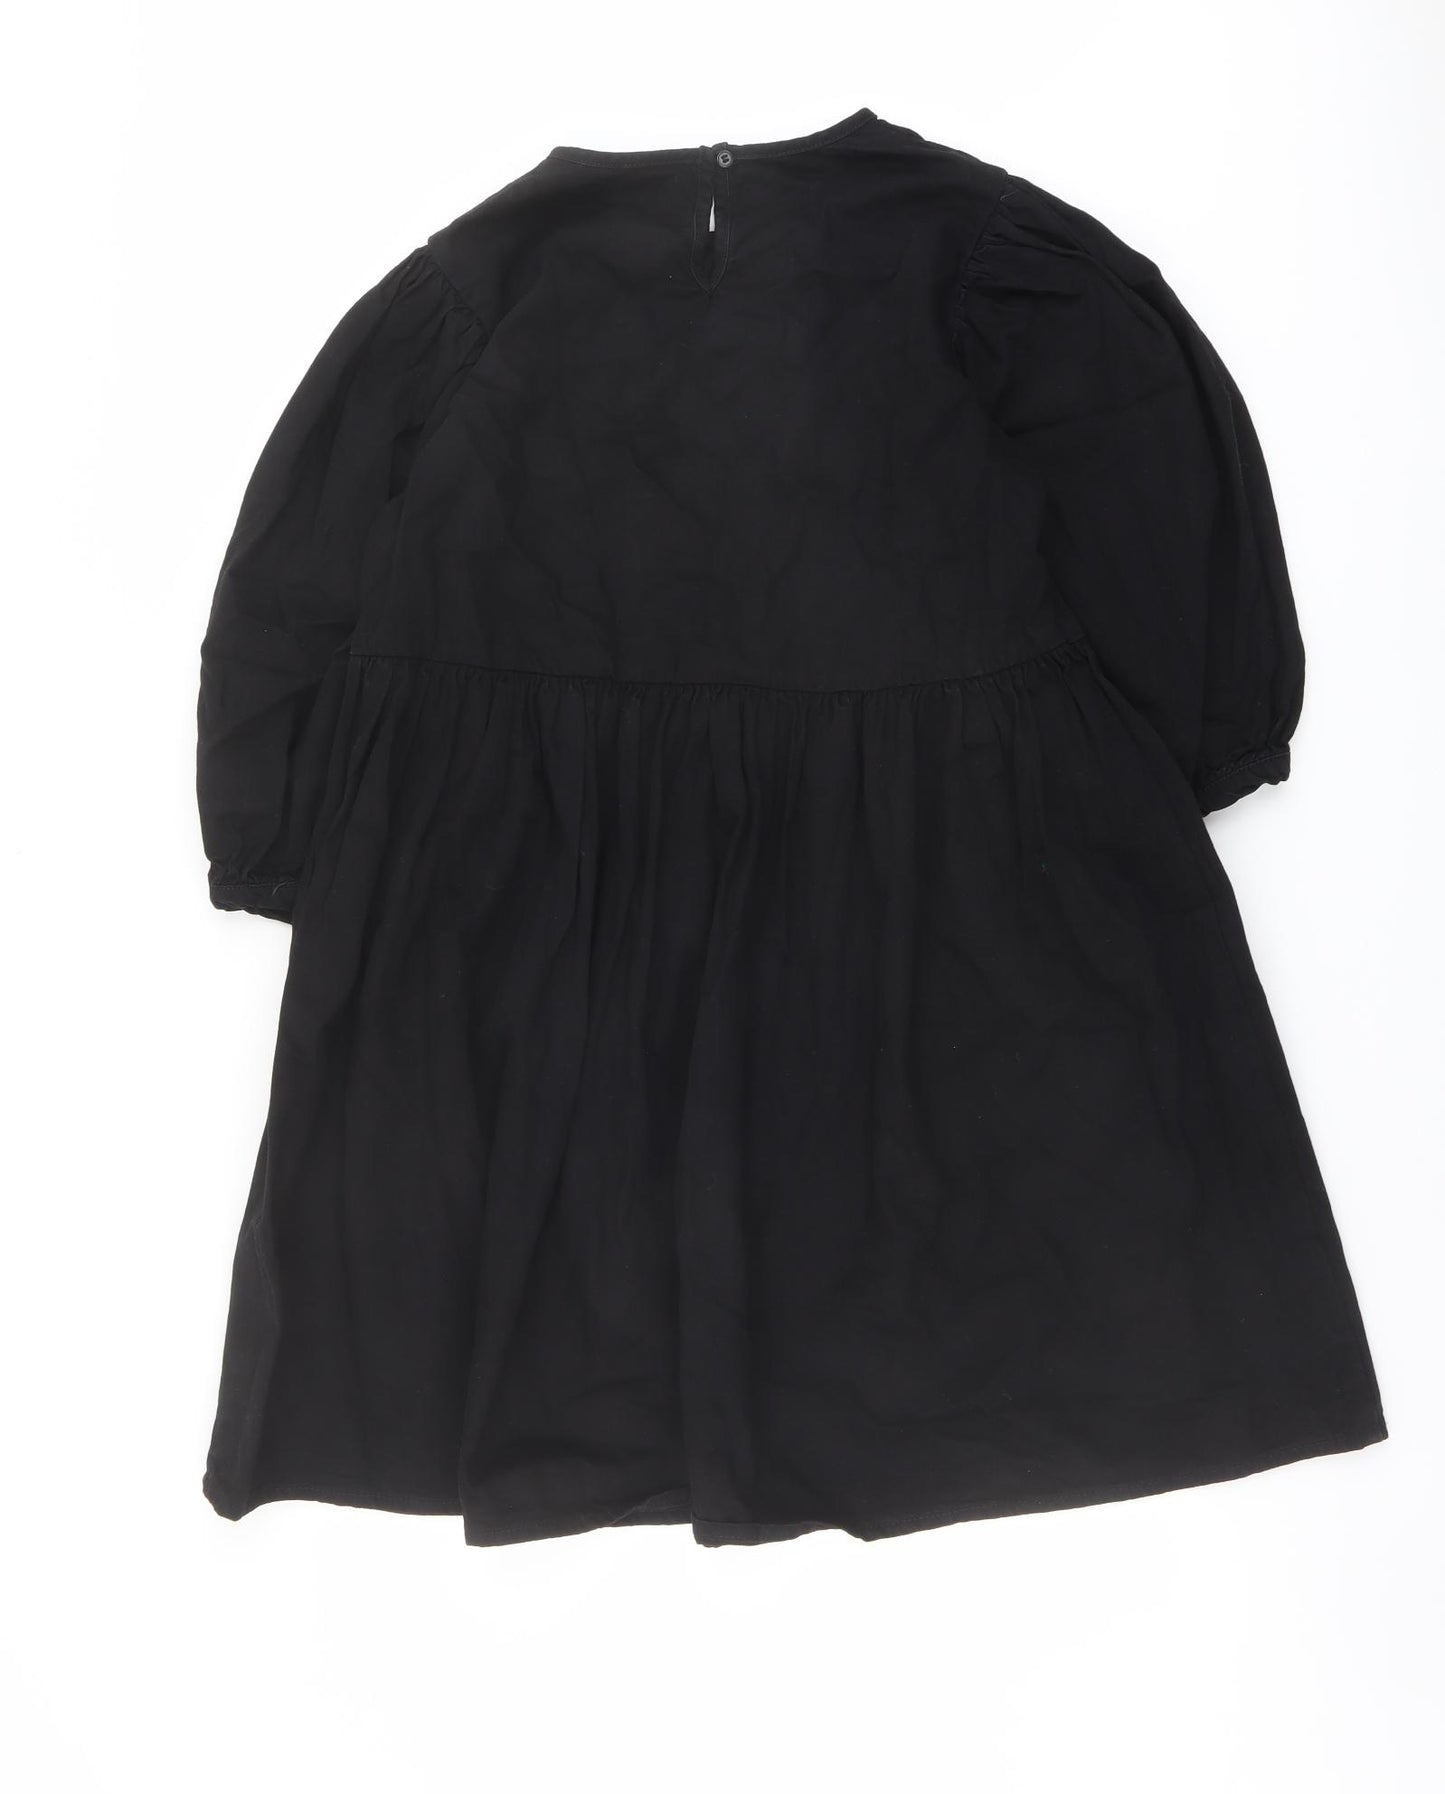 Denim & Co. Womens Black Cotton A-Line Size 14 Round Neck Button